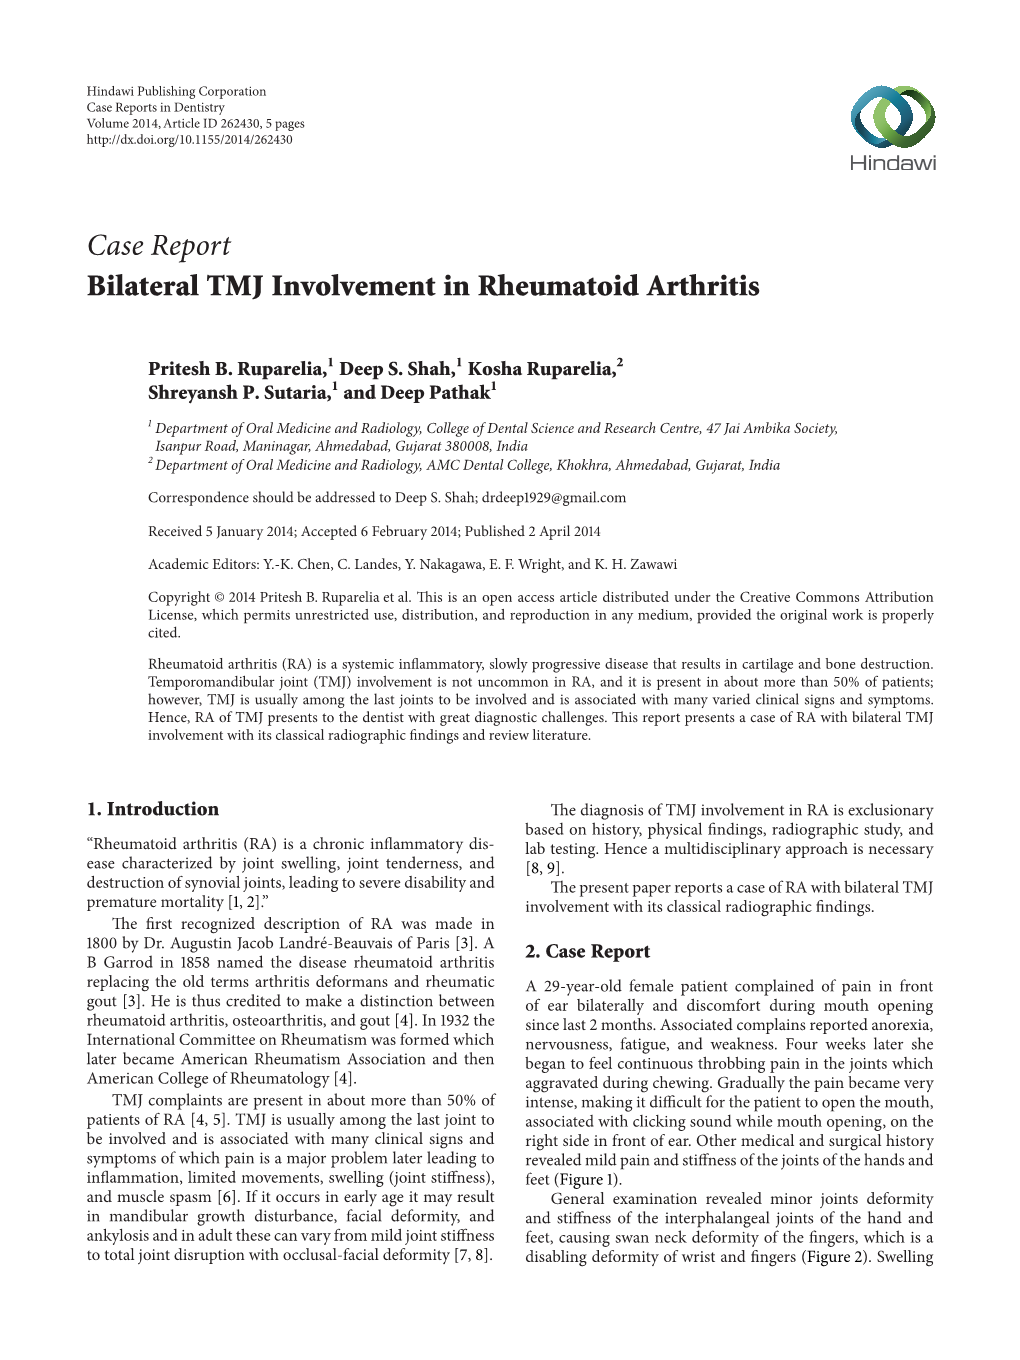 Case Report Bilateral TMJ Involvement in Rheumatoid Arthritis